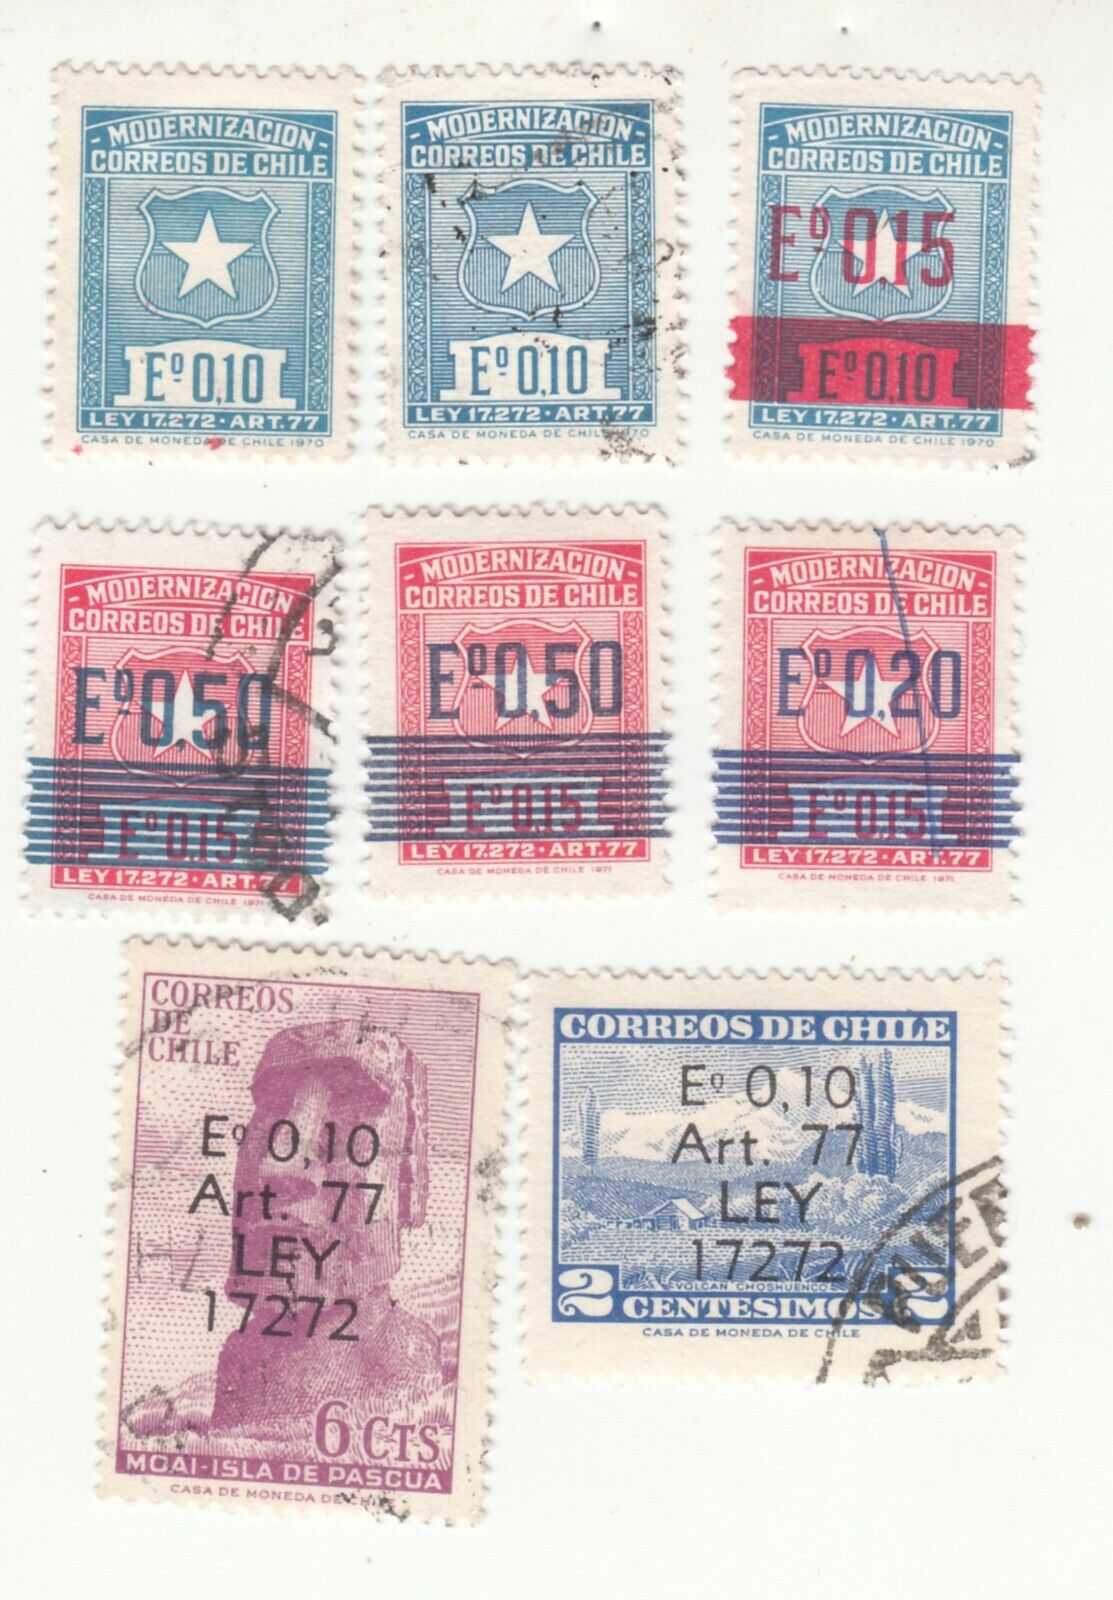 Chile 1971 Modernización Correos Ley 17.272. 8 Stamps. Modernisation. Used